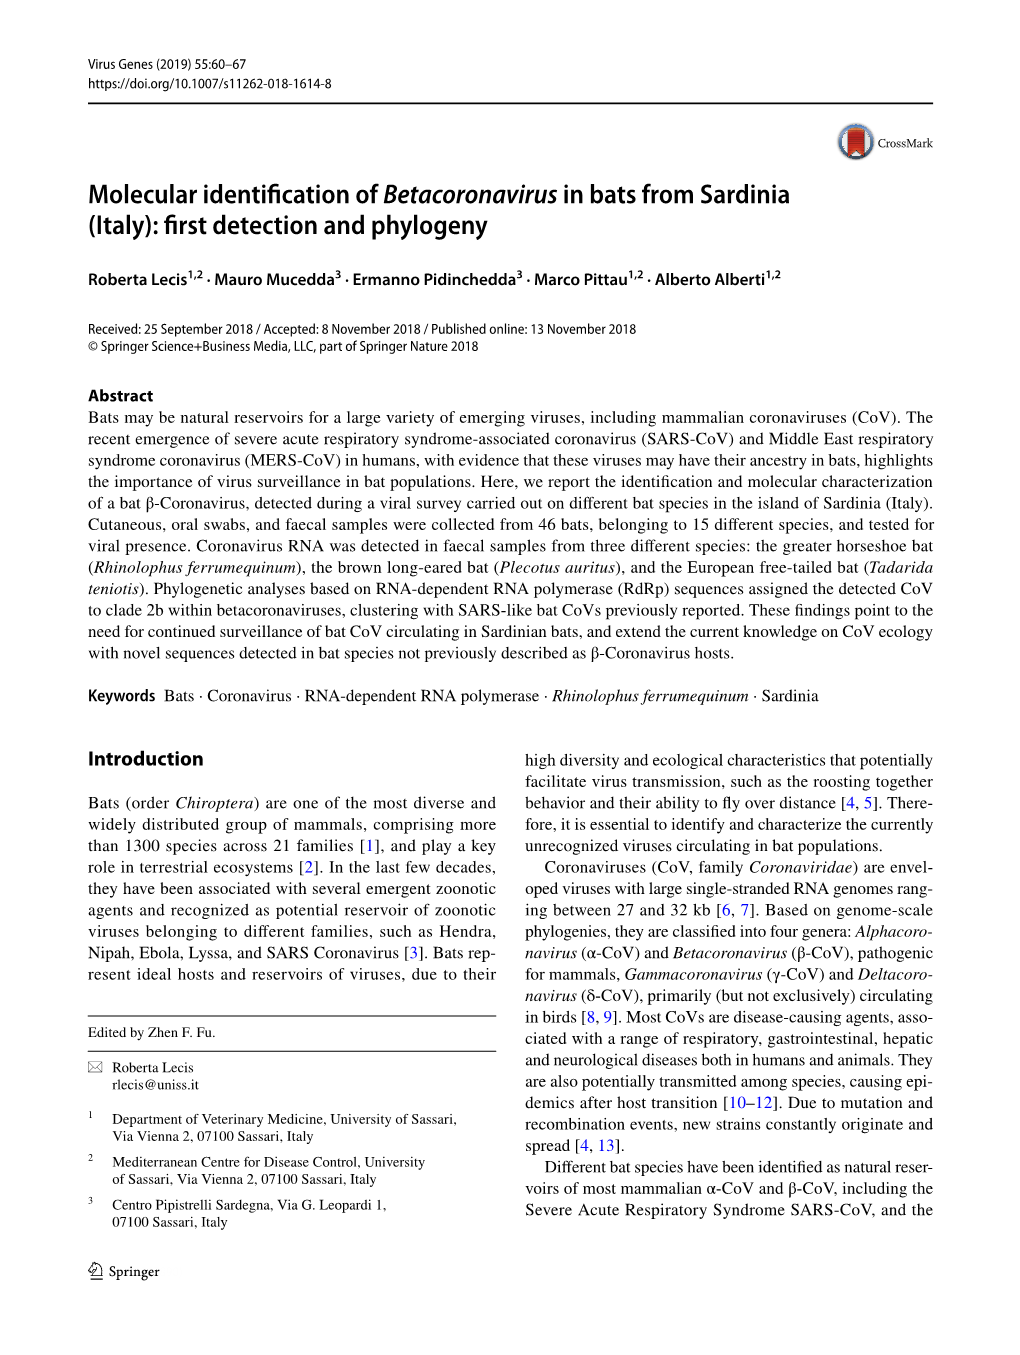 Molecular Identification of Betacoronavirus in Bats from Sardinia (Italy): First Detection and Phylogeny